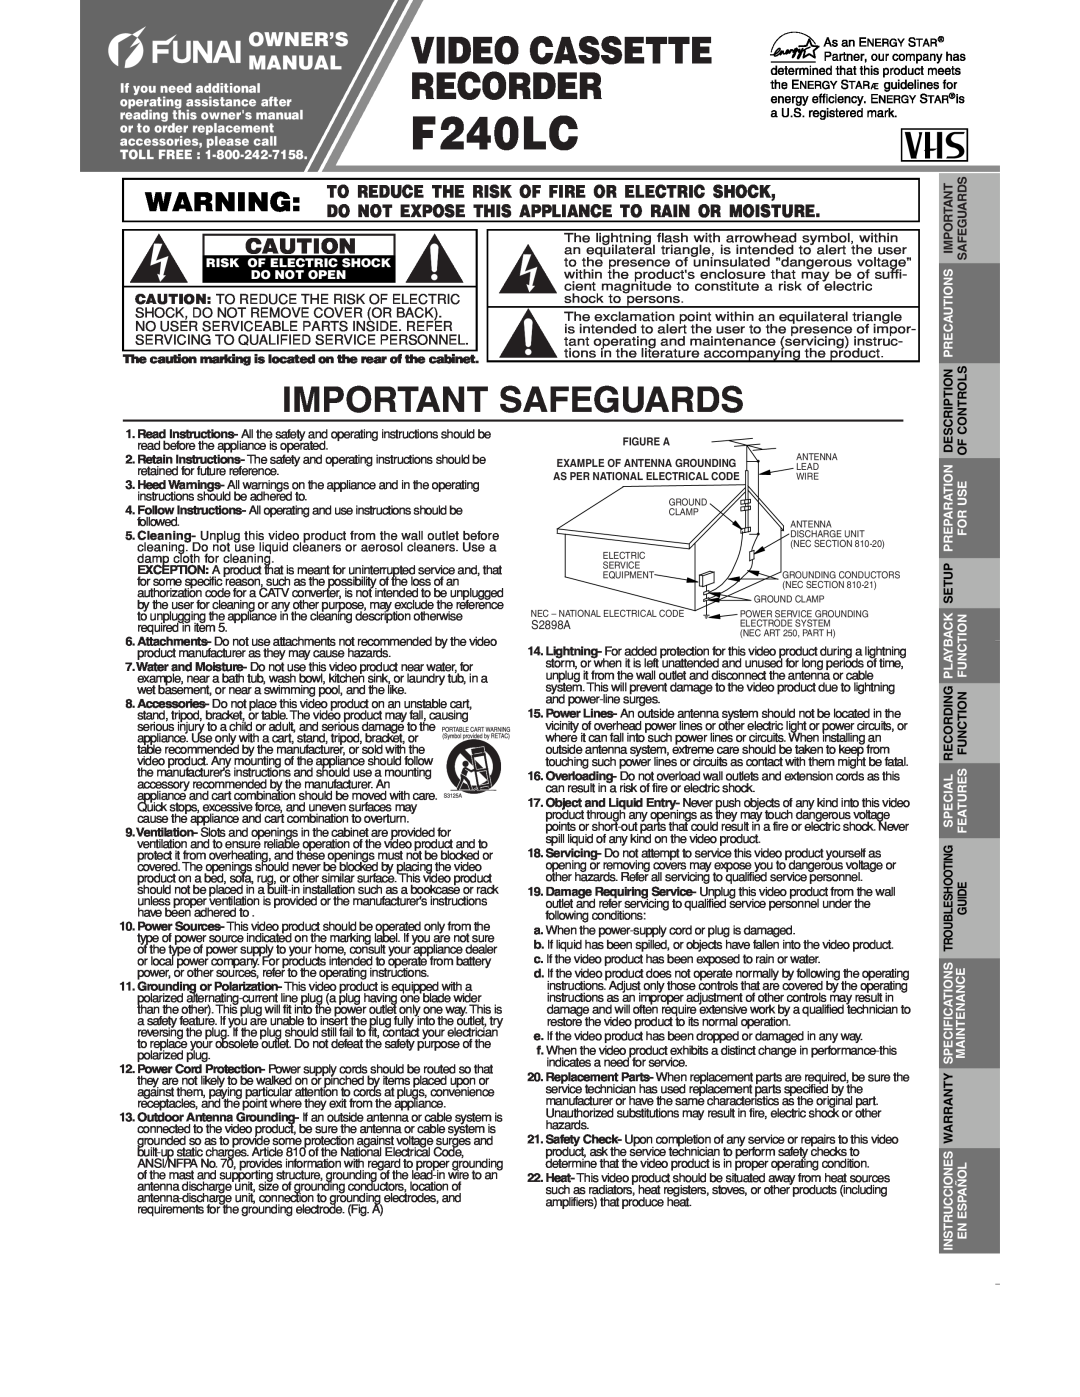 FUNAI F240LC warranty Important Safeguards, Video Cassette Recorder, Owner’S Manual, Description, Controls 